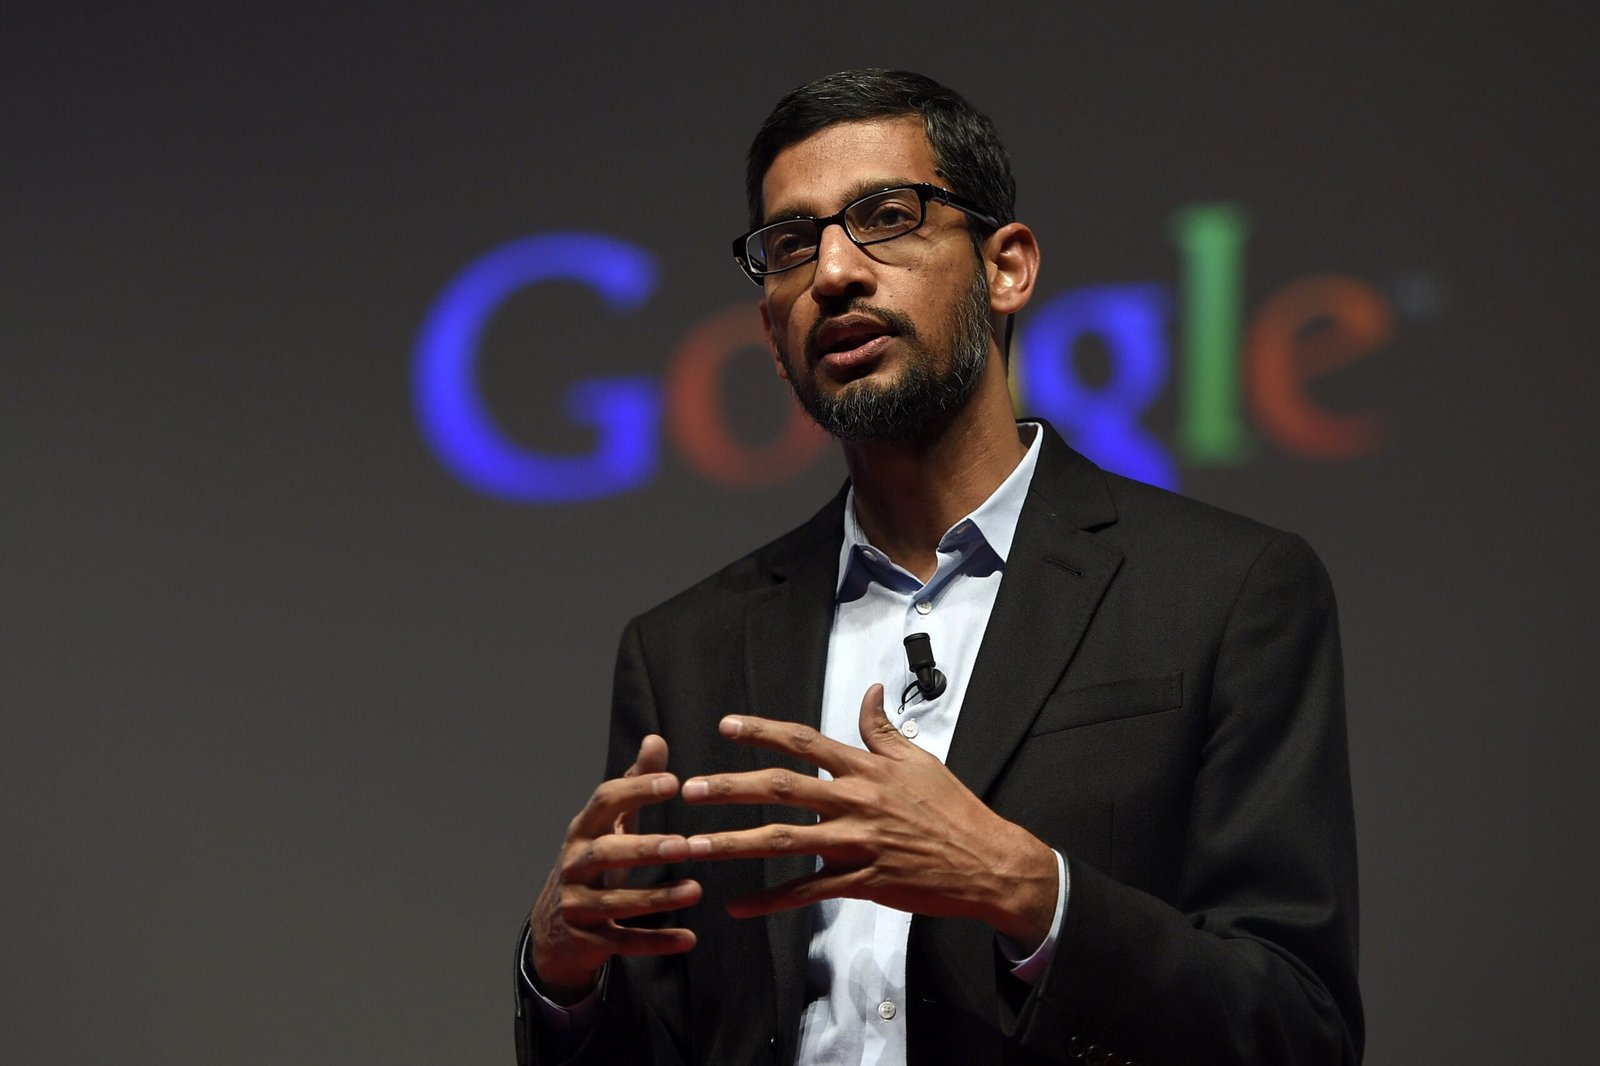 The Success Story of Sundar Pichai: From Chennai to Google